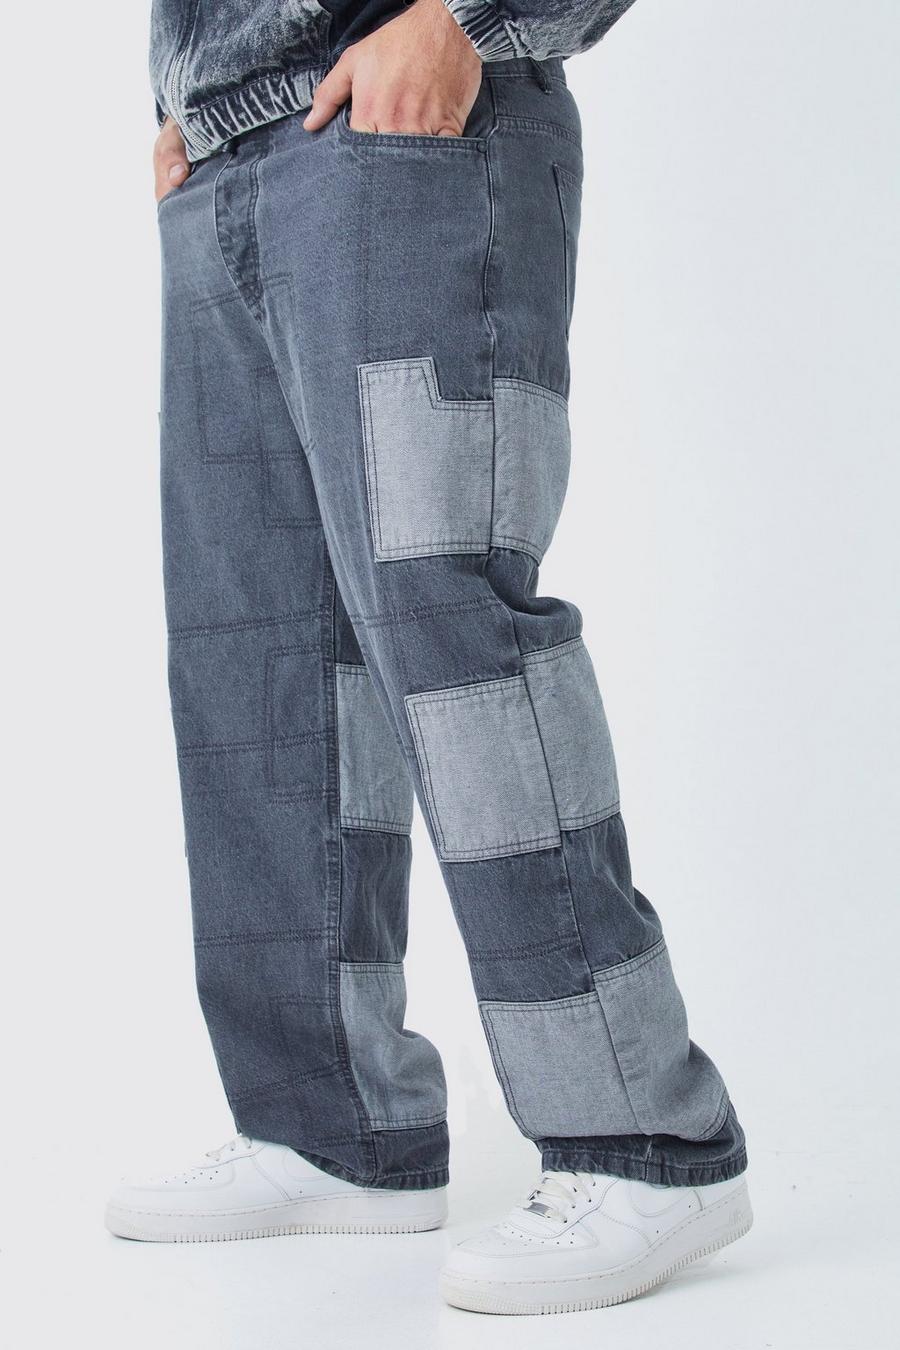 Jeans rilassati Plus Size in denim rigido effetto patchwork, Light grey